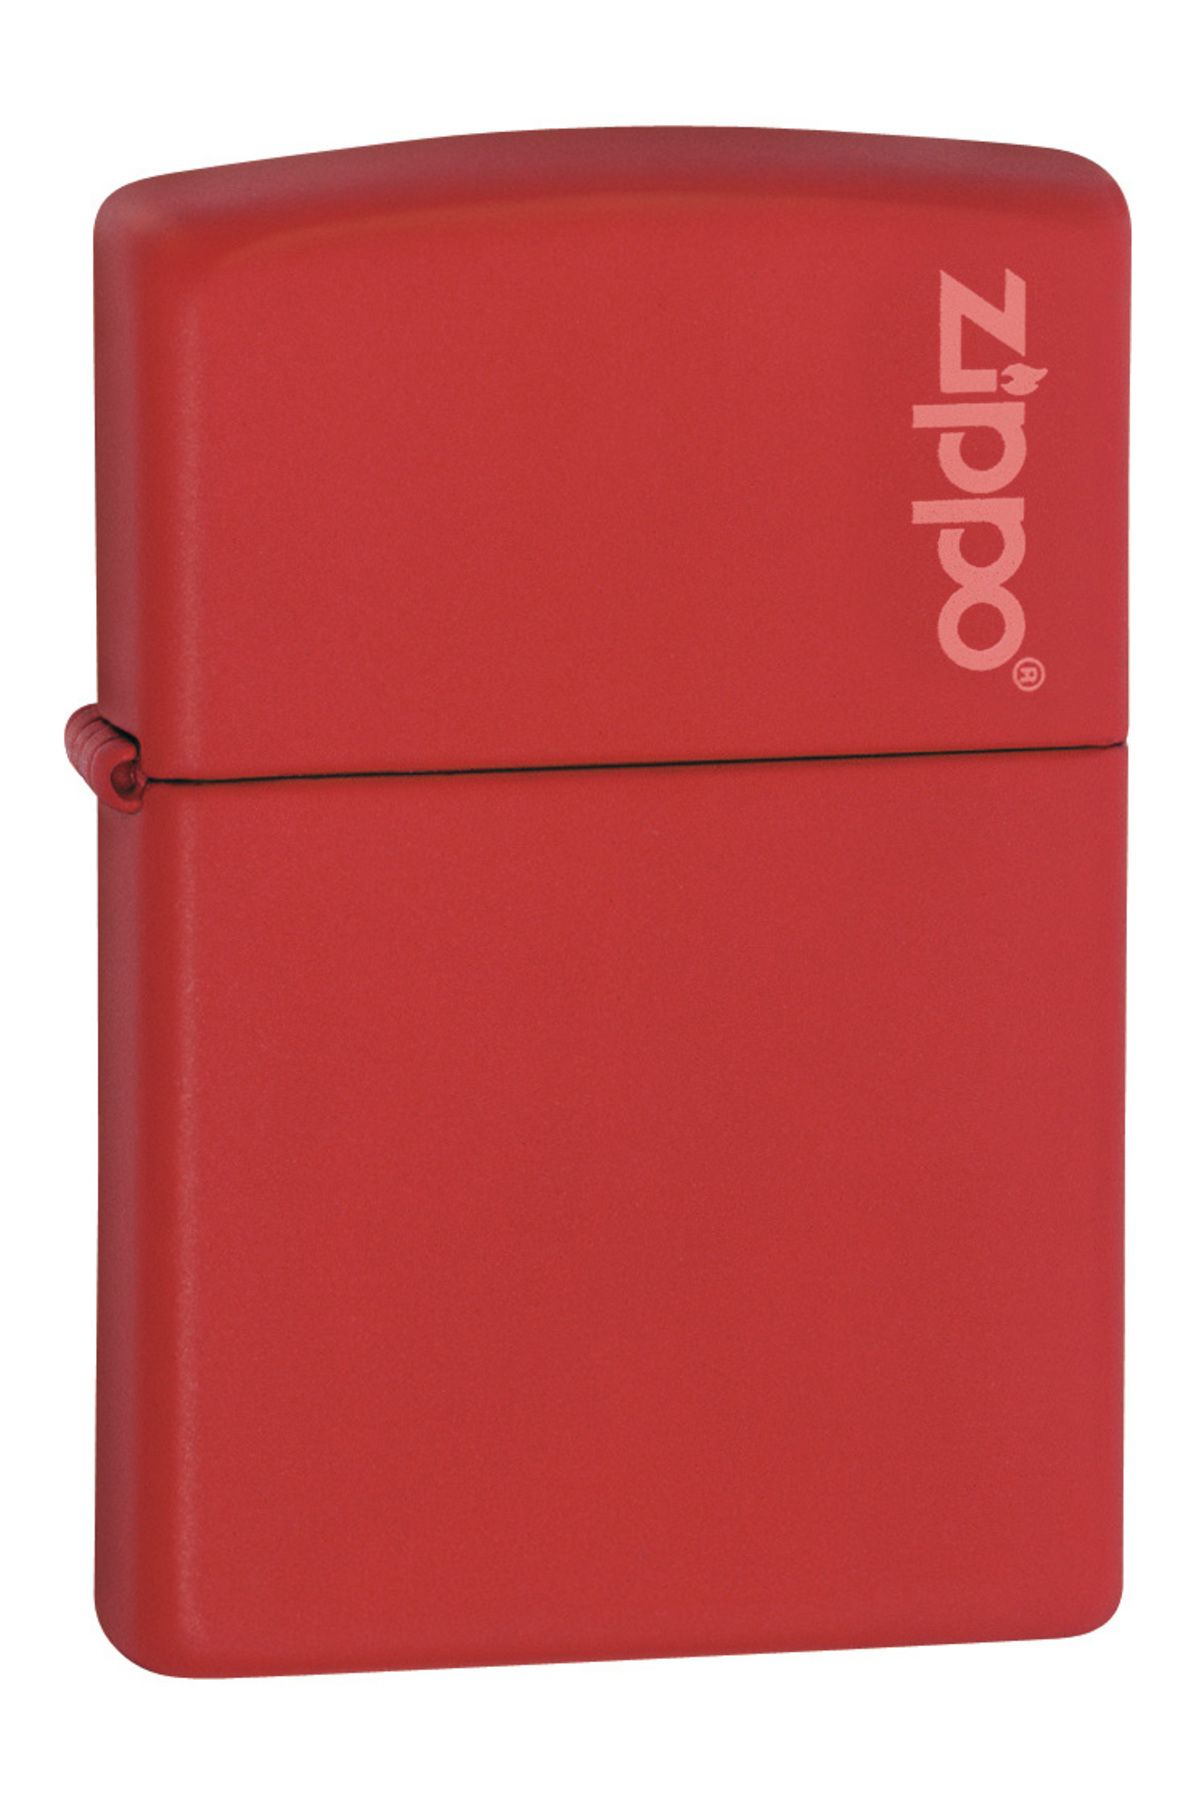 Zippo Çakmak Kırmızı Red Matte Logo 233zl-000052 Orijinal